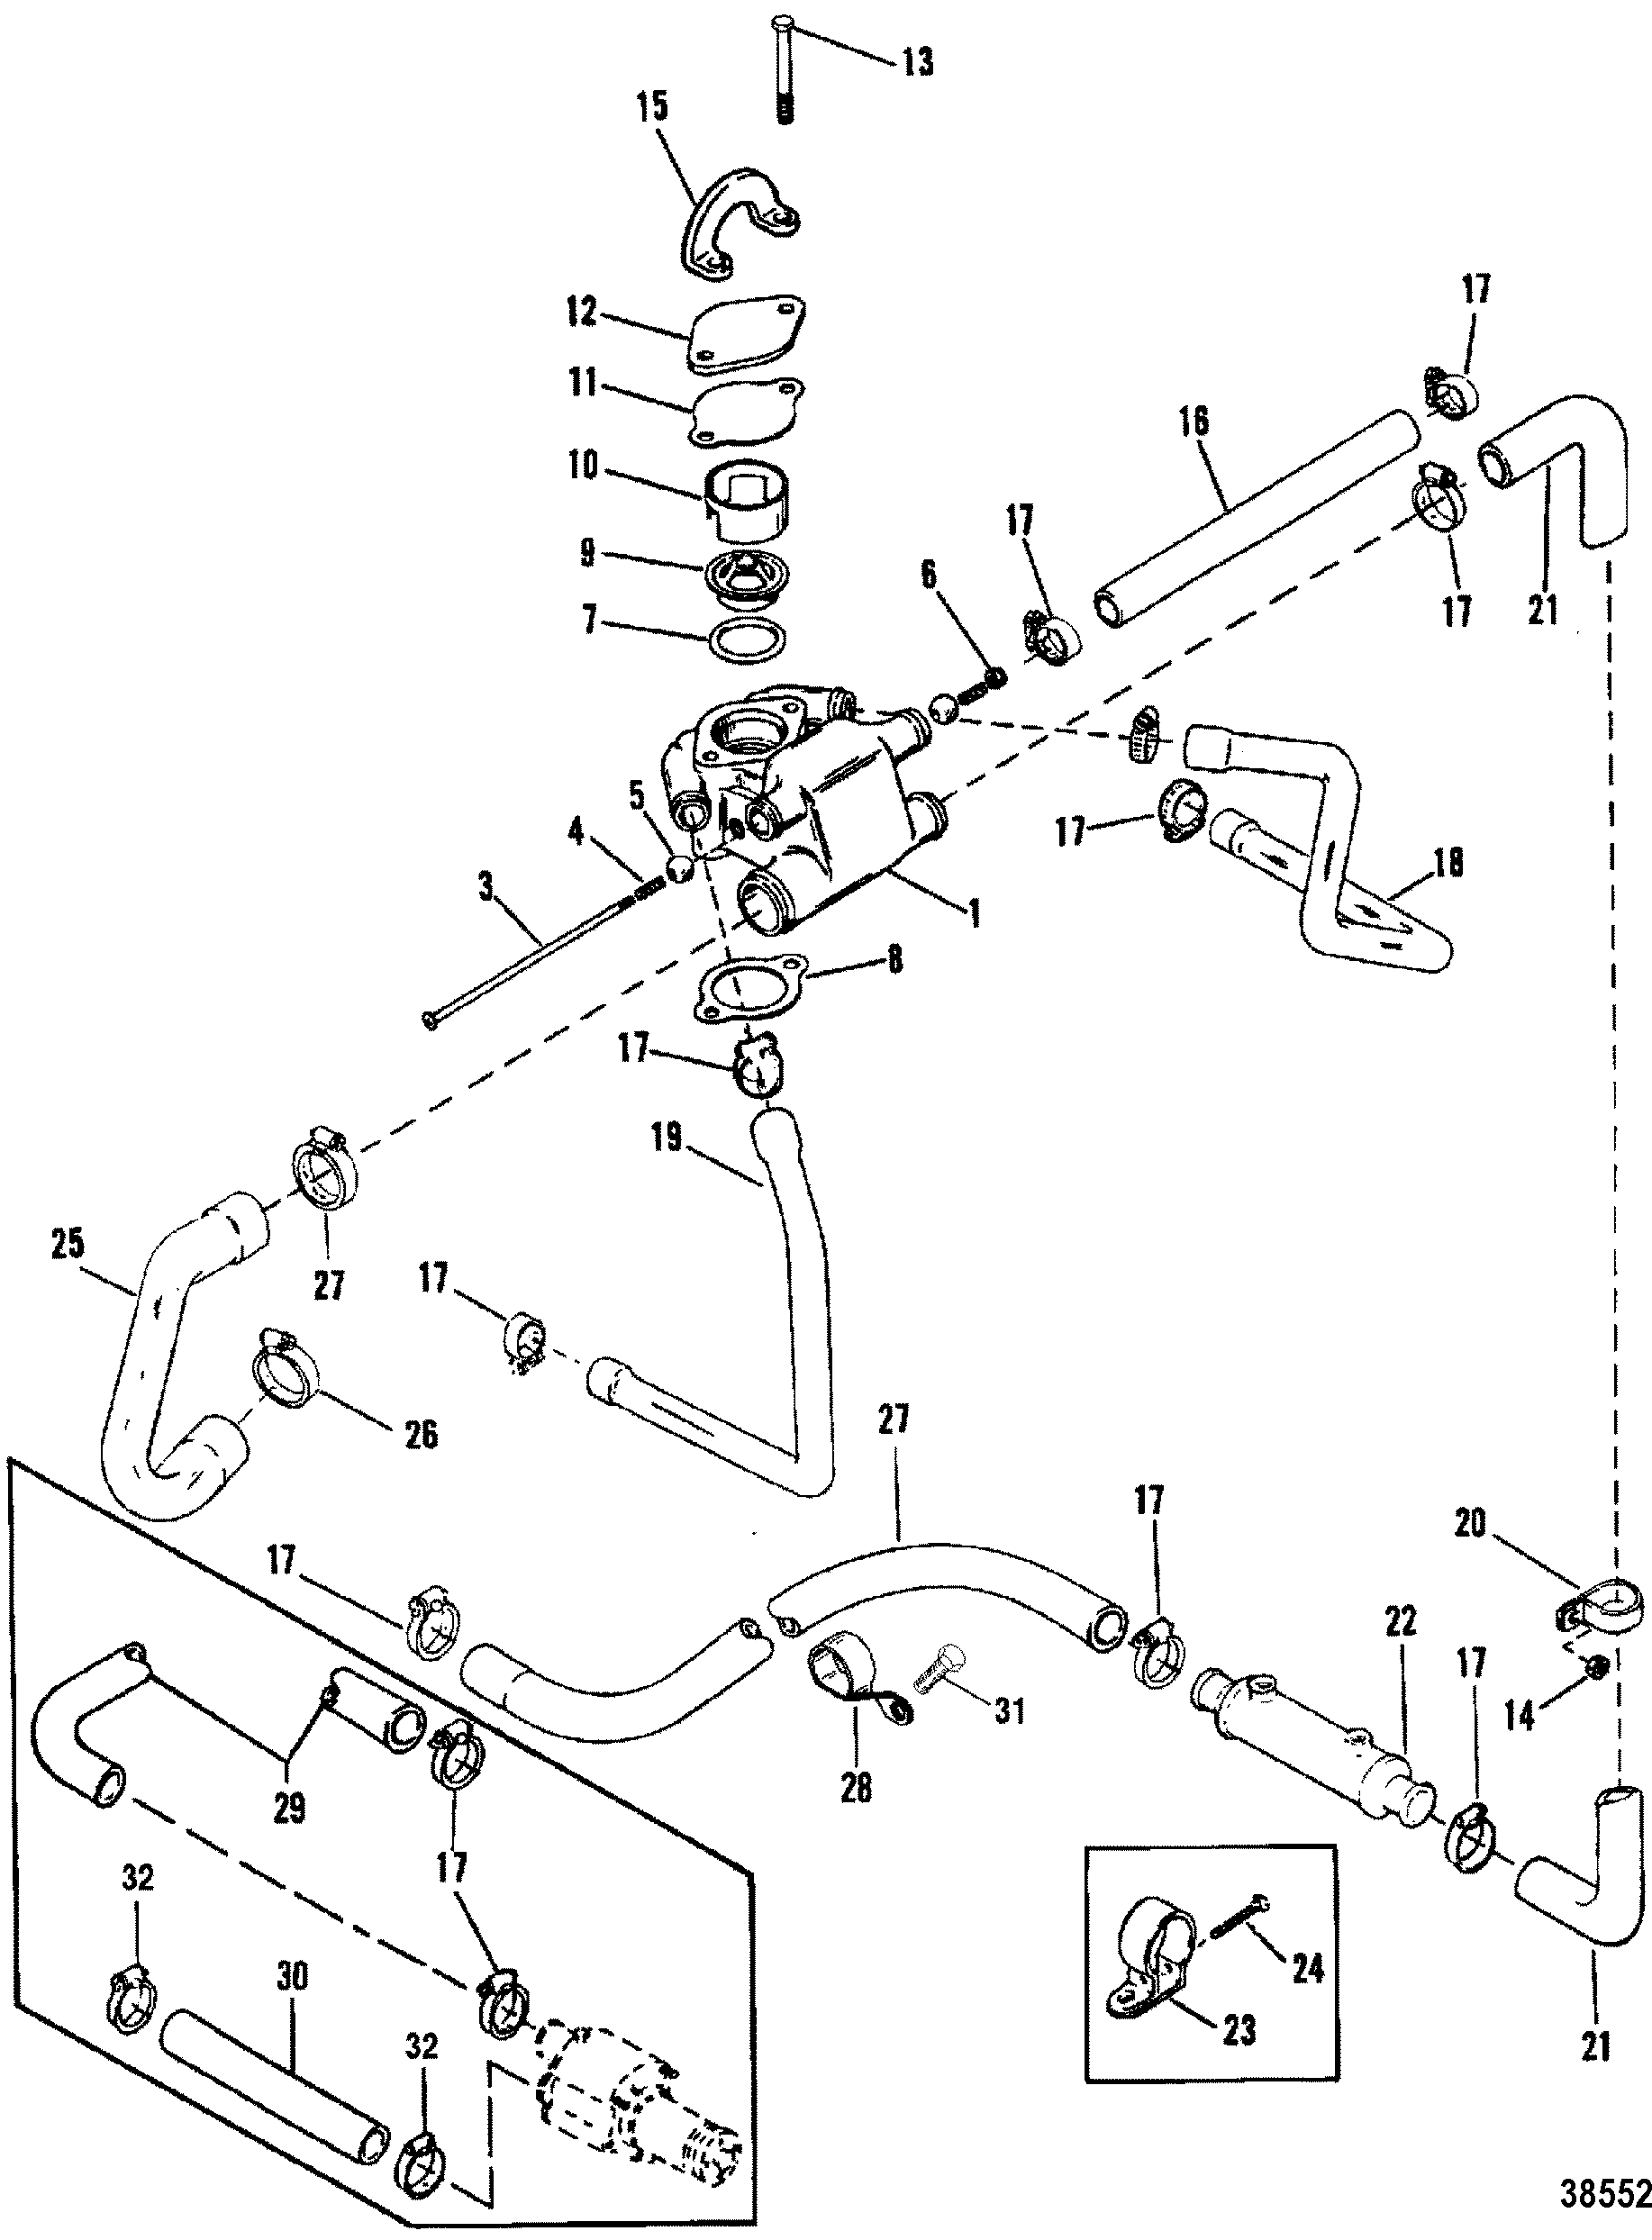 Mercruiser 4.3 Cooling System Diagram 1